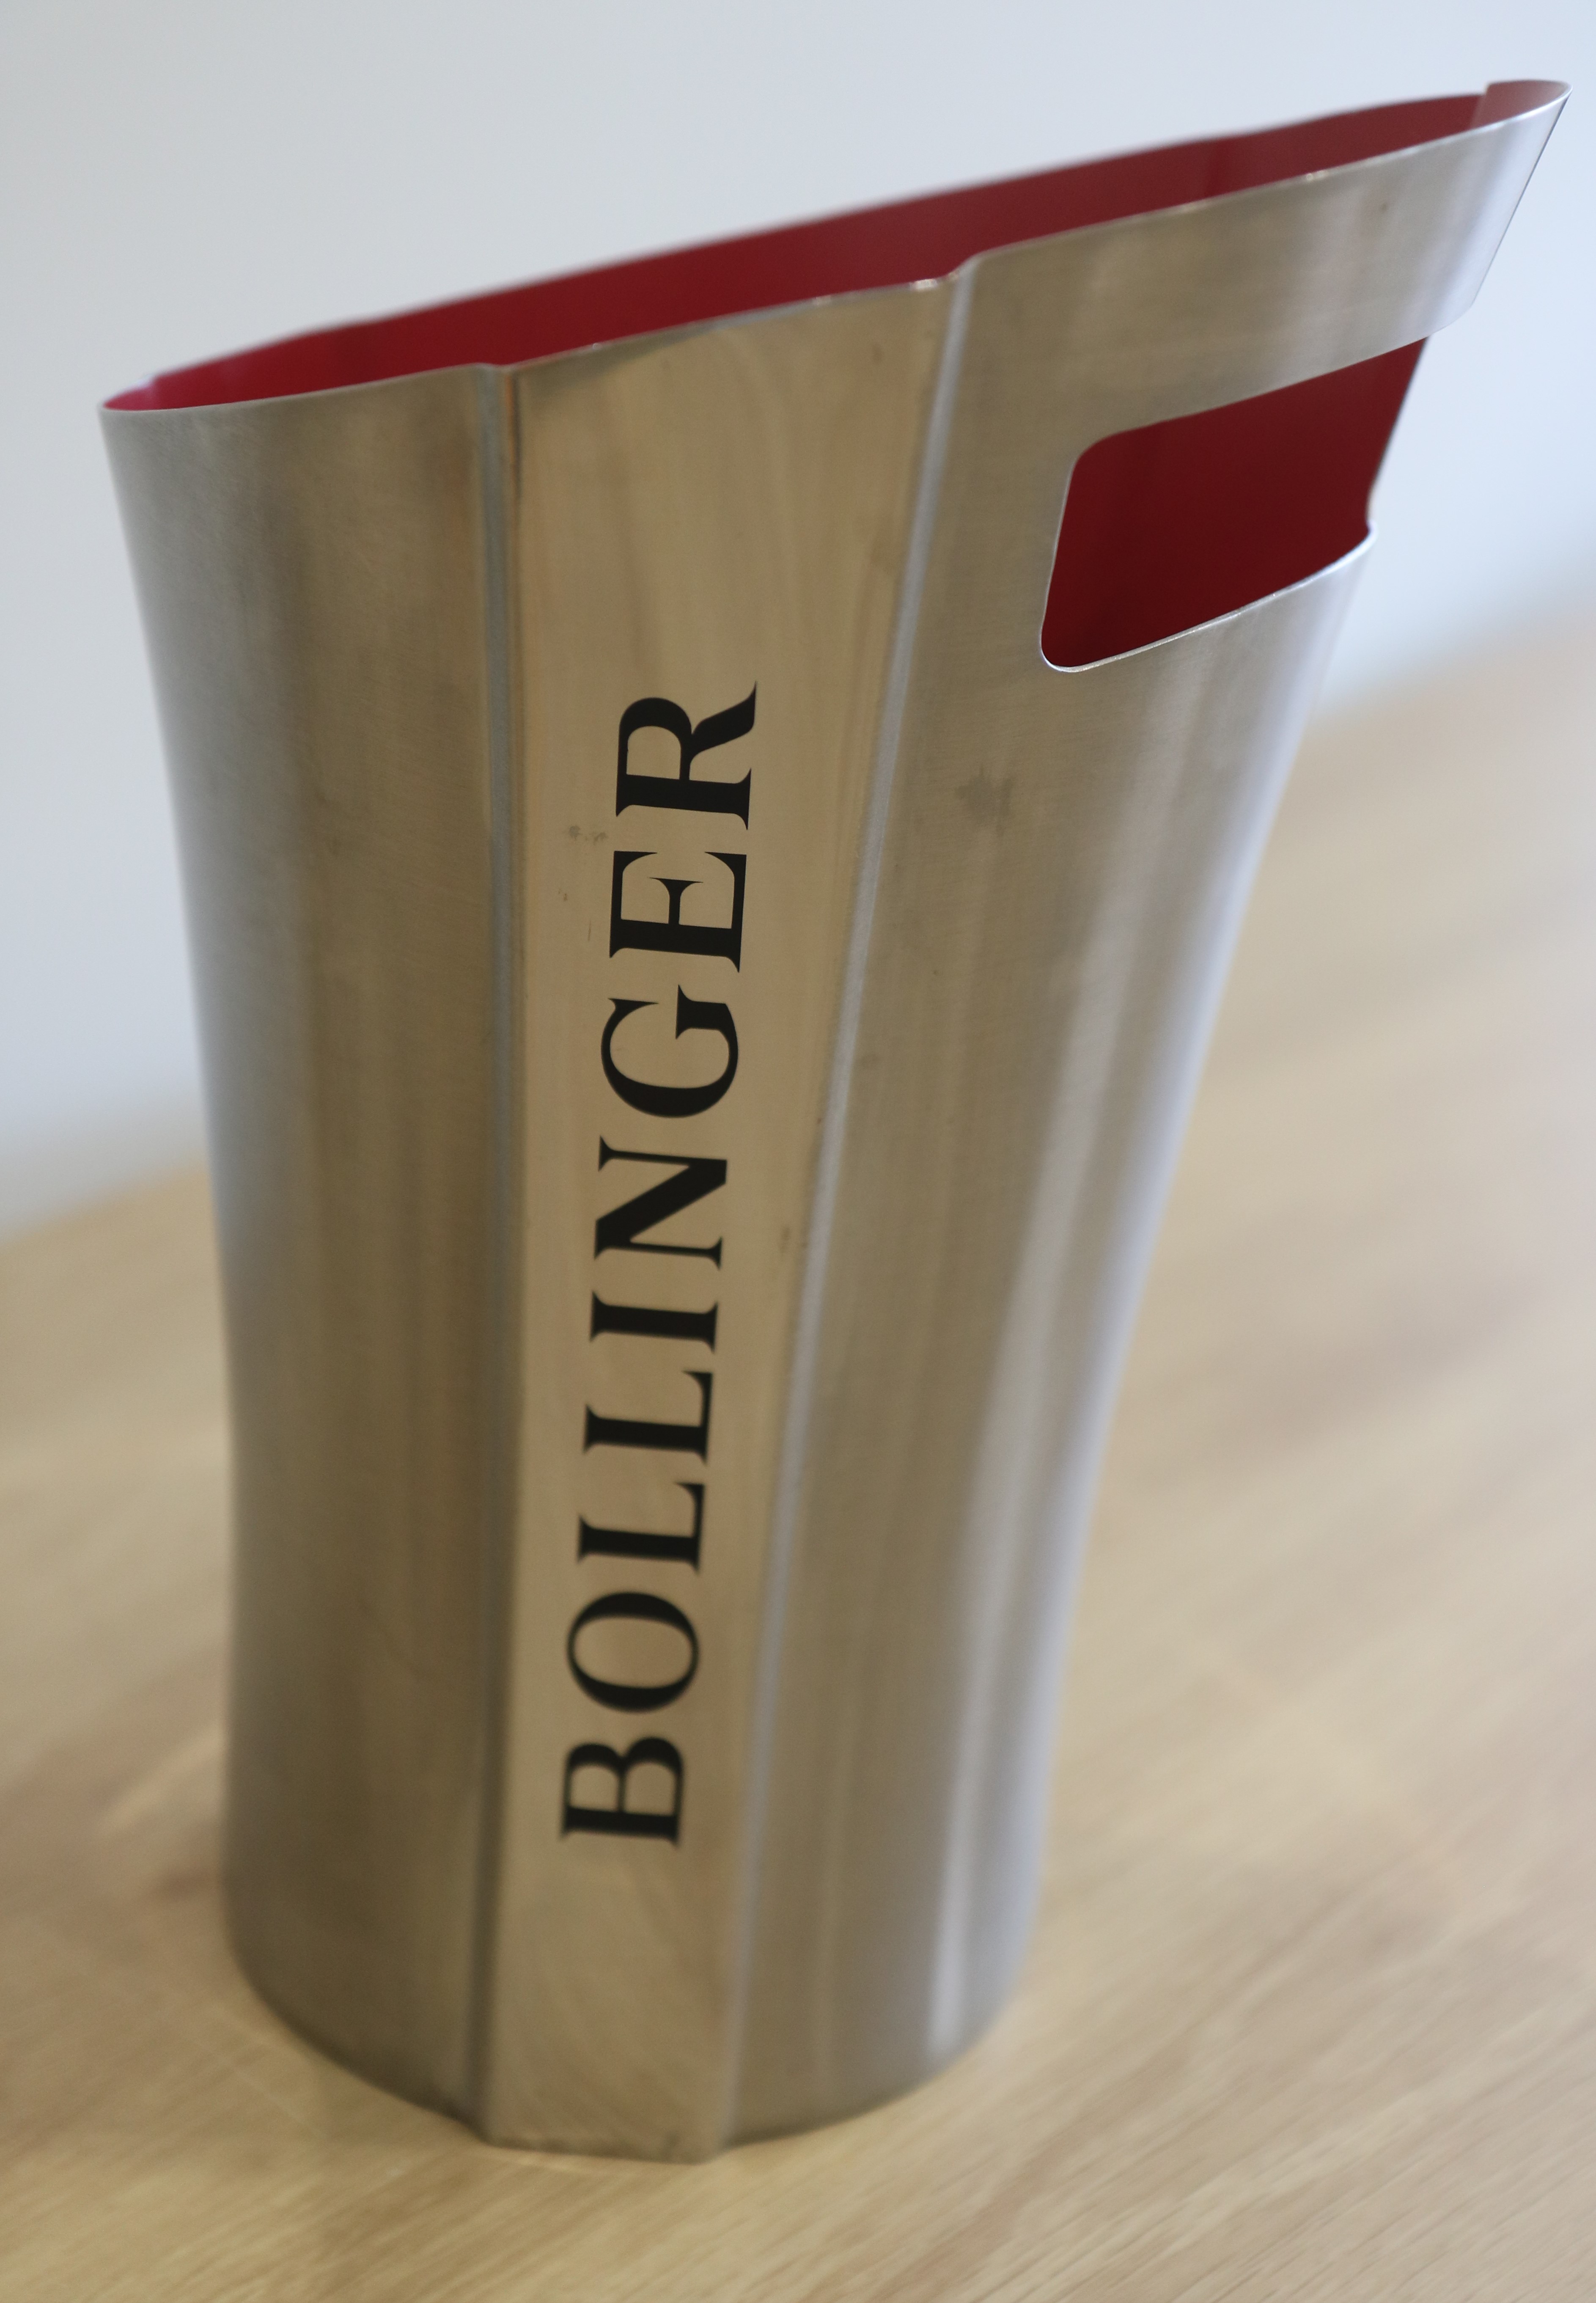 bollinger_metal_stainless_ice_bucket_champagne_cooler_for_sale_bollinger_champagne_4.JPG